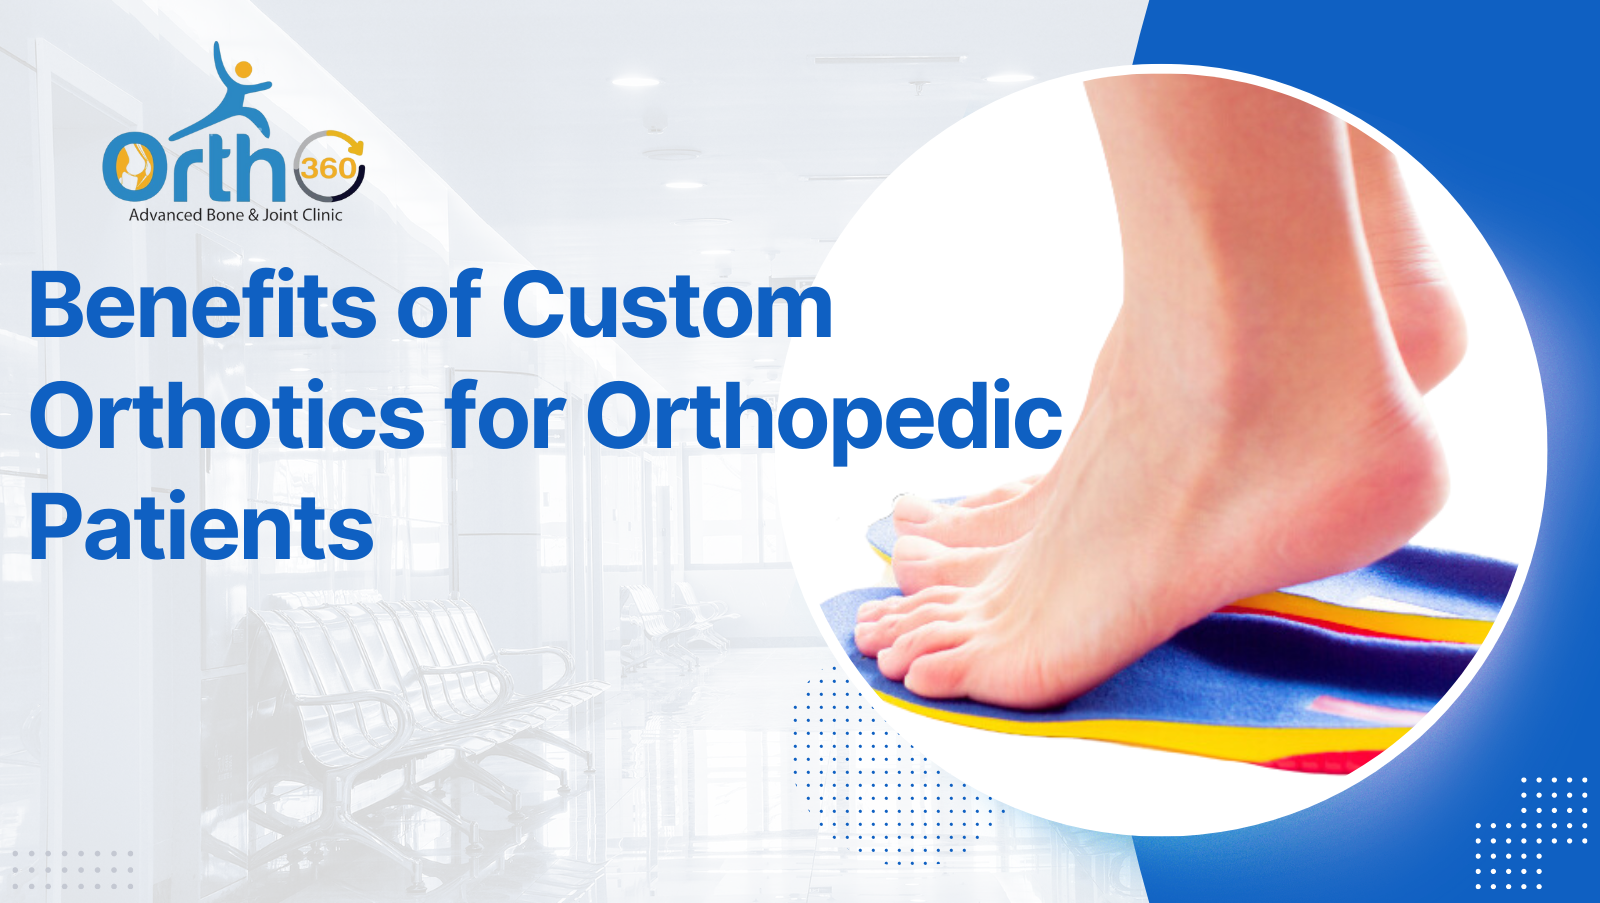 The Benefits of Custom Orthotics for Orthopedic Patients - Ortho 360